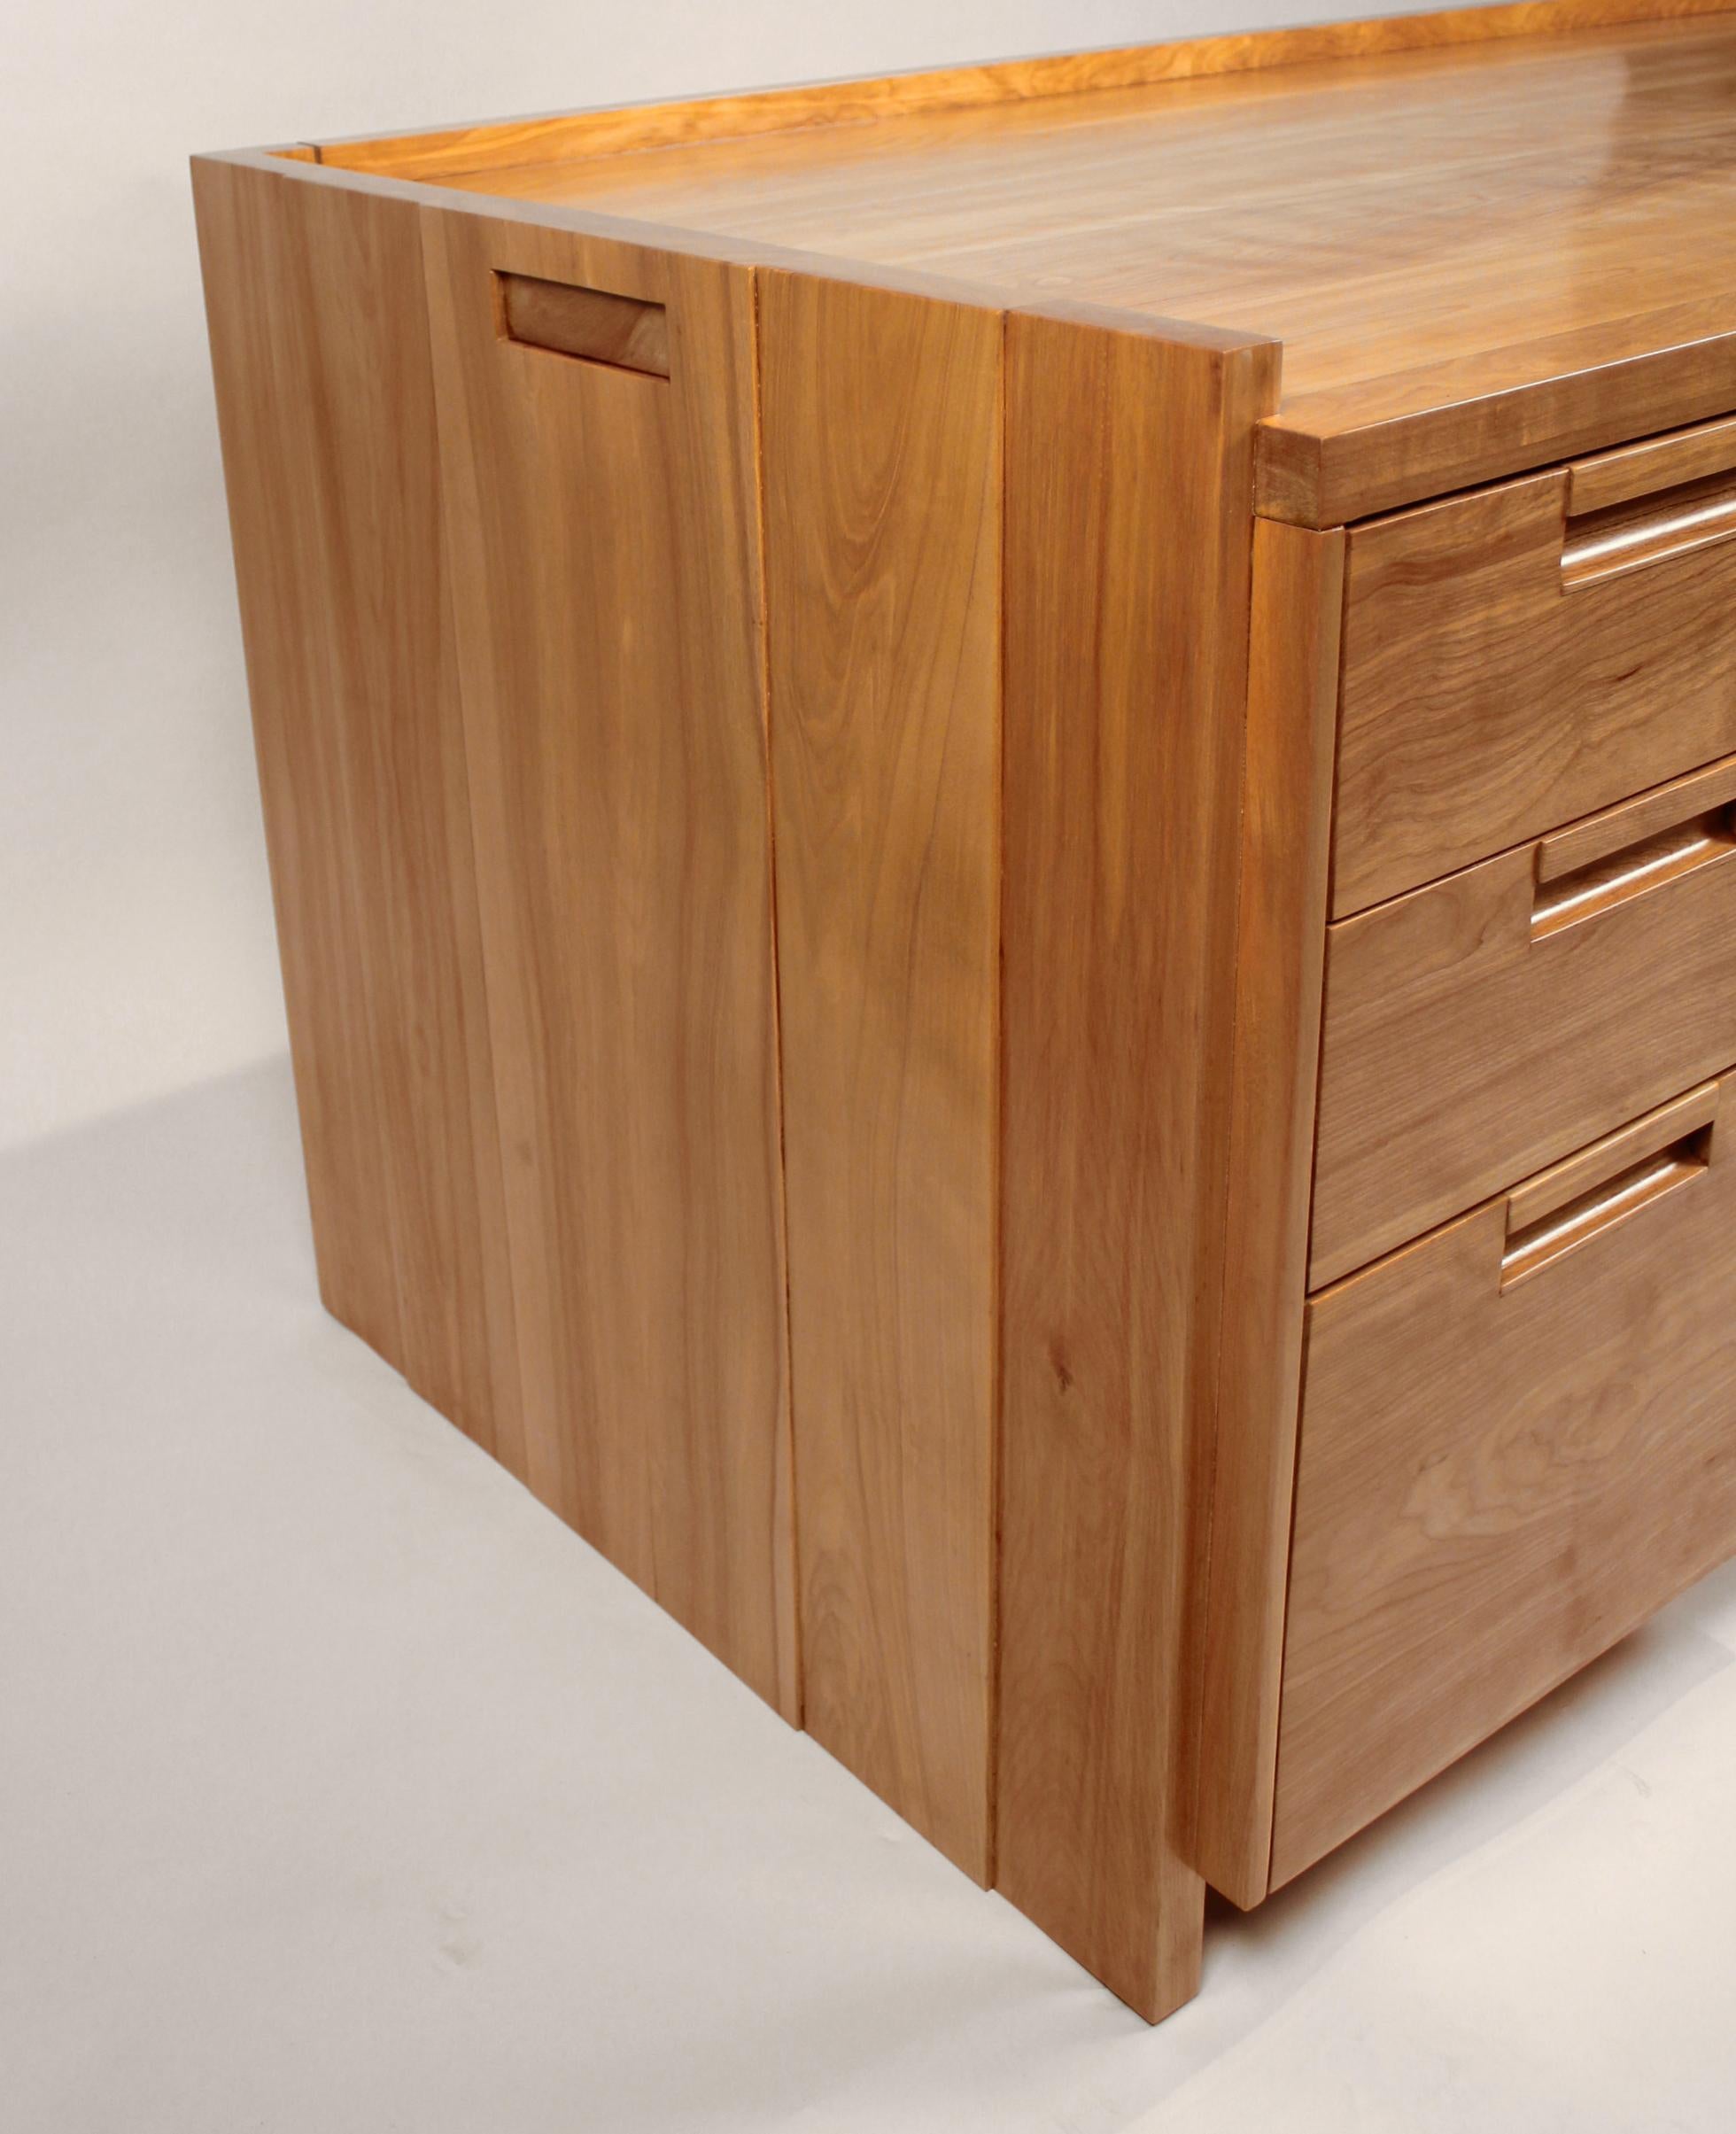 American Custom Commissioned Solid Wood Desk by California Studio Craftsman John Kapel